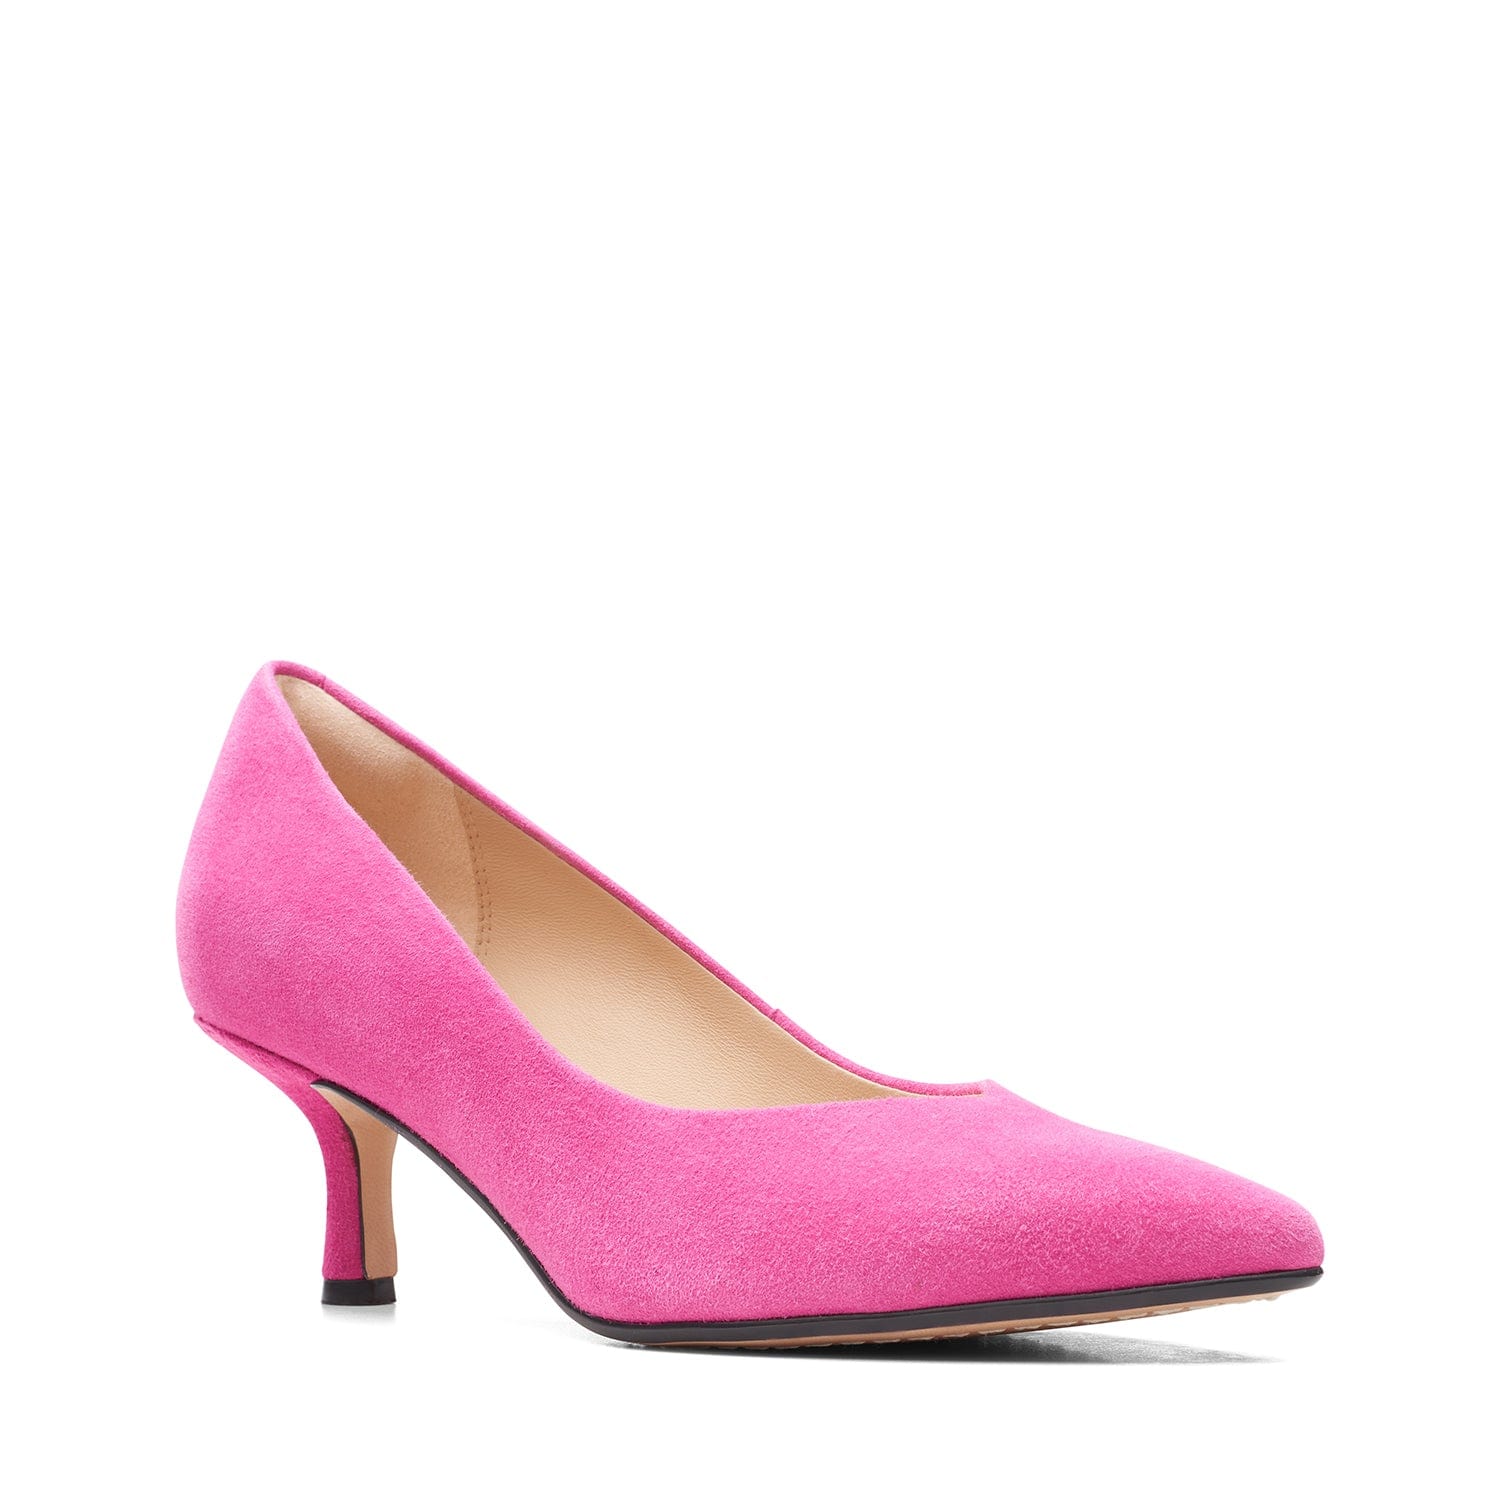 Clarks Violet55 Court Shoes - Berry Suede - 261615324 - D Width (Standard Fit)